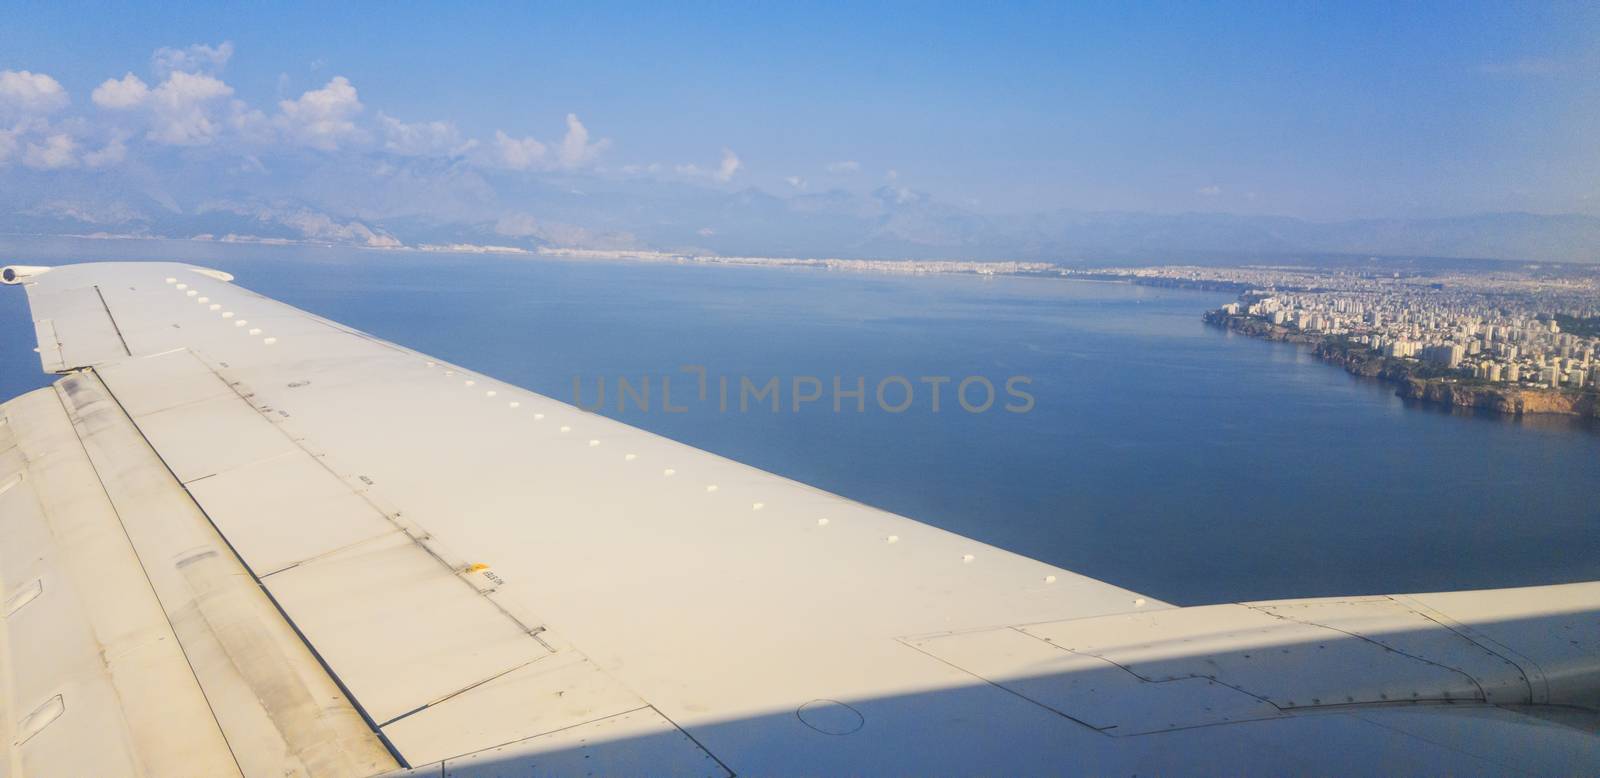 Plane window view to Antalya by savcoco